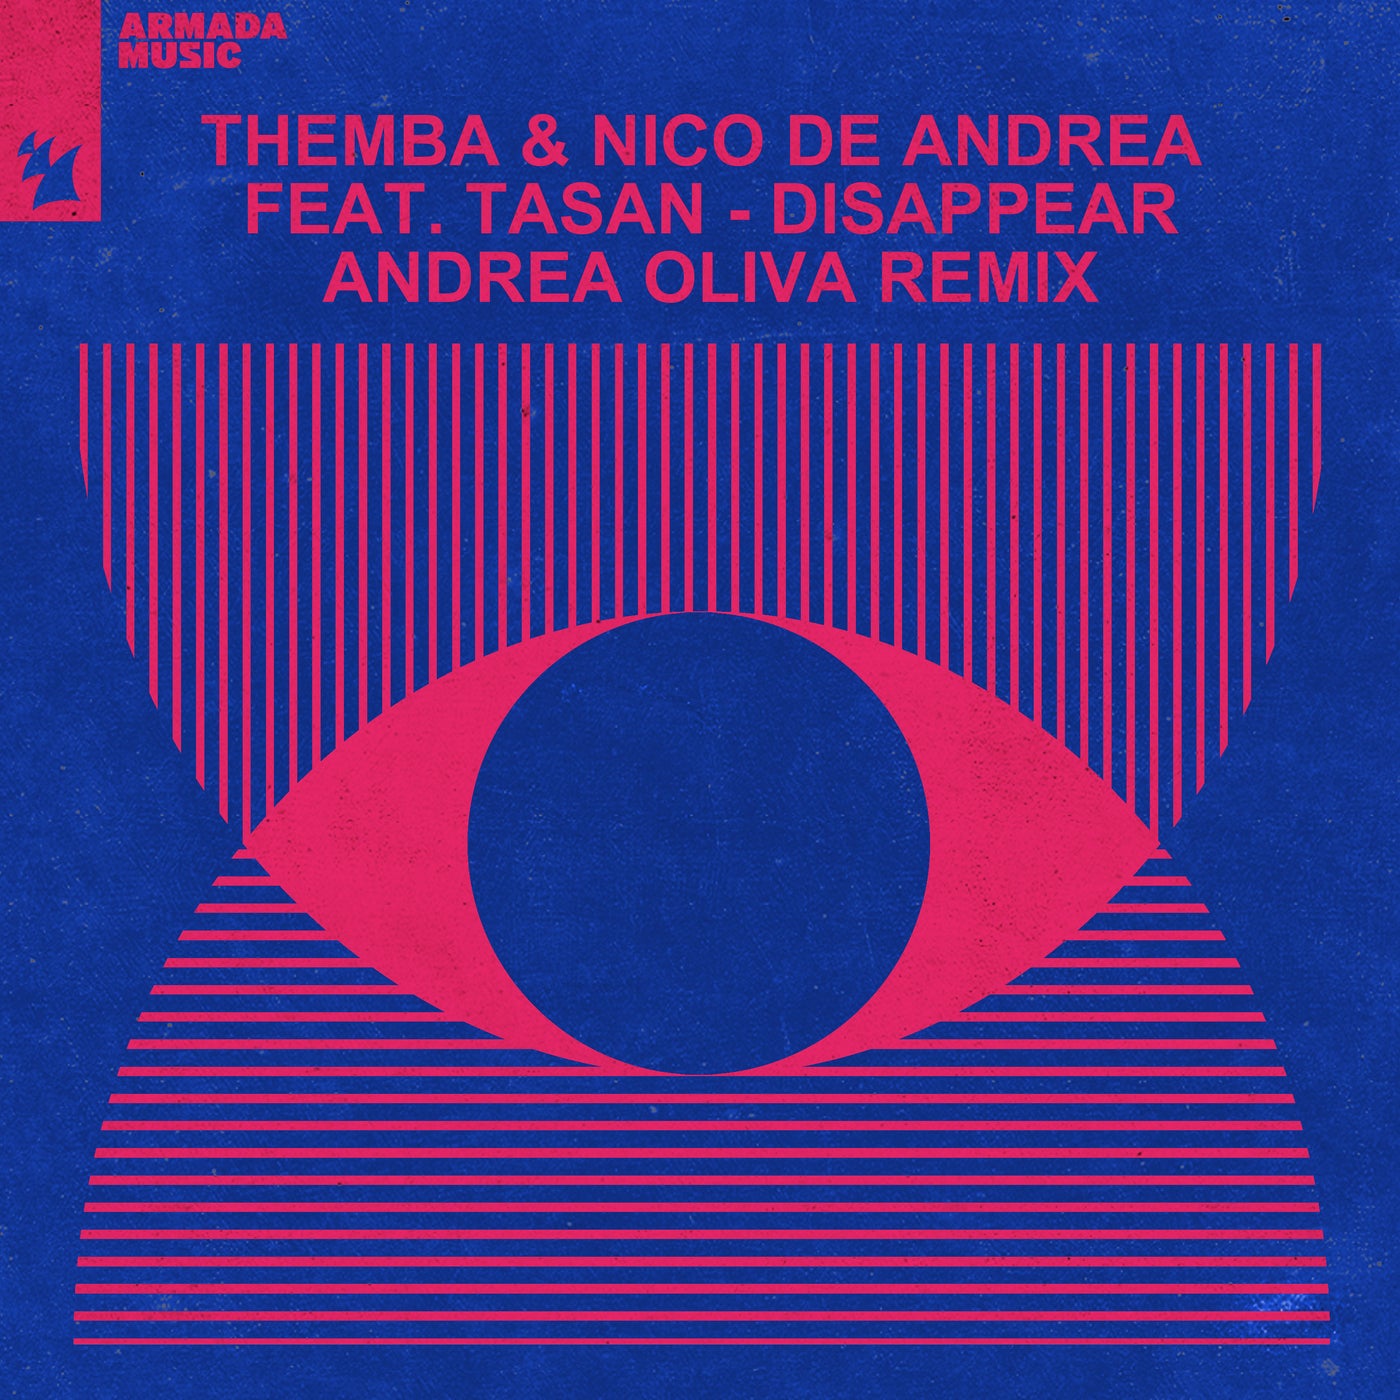 Disappear - Andrea Oliva Remix